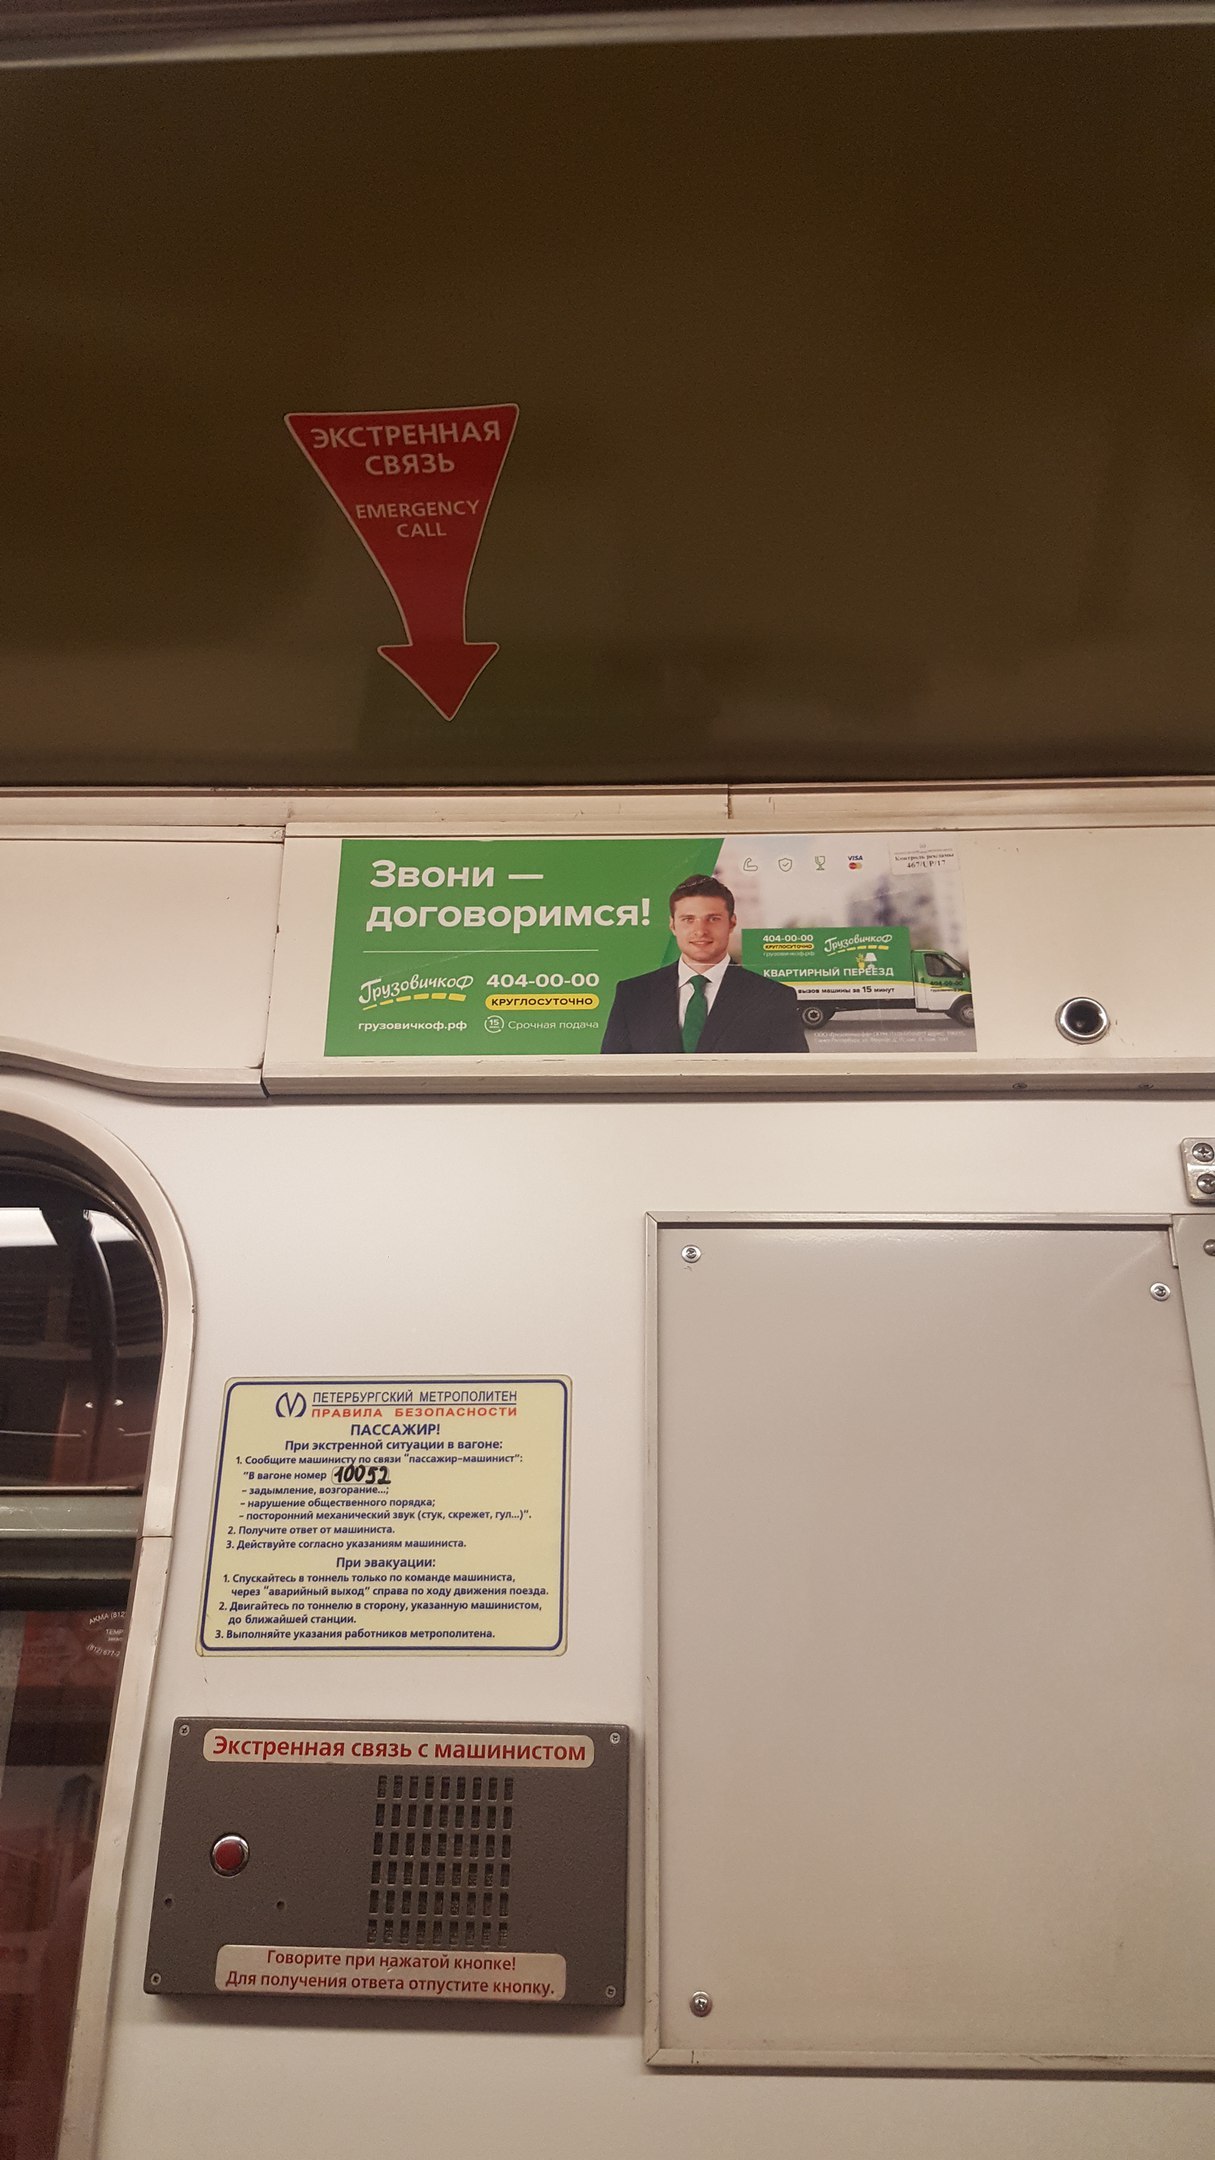 emergency communication - Metro, Metro SPB, Saint Petersburg, Not advertising